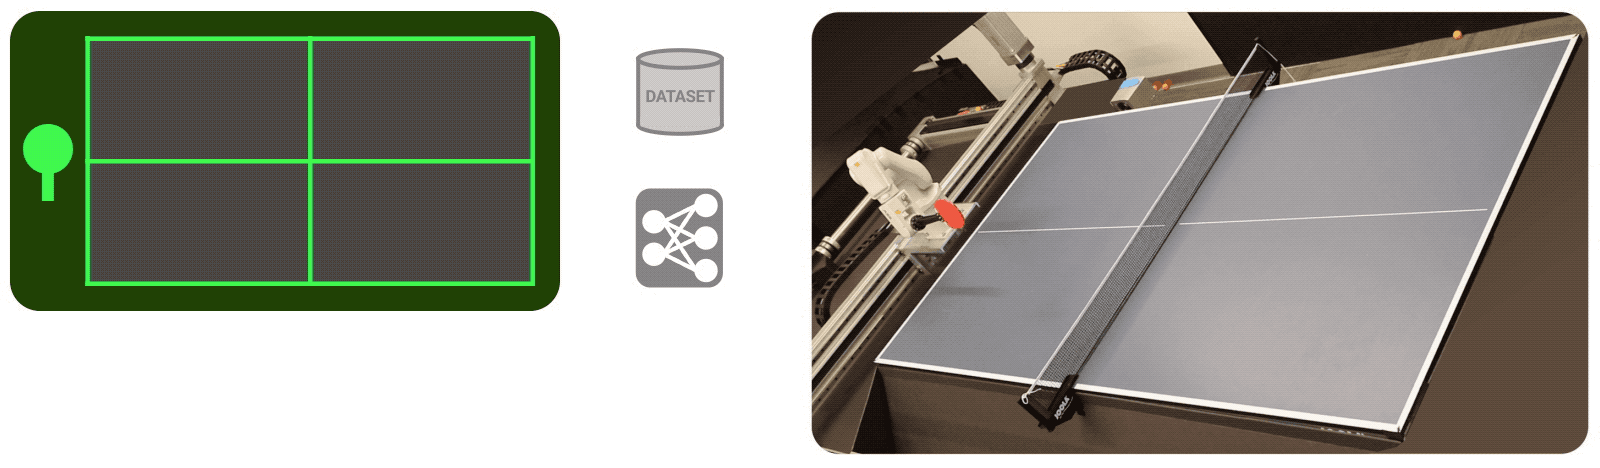 Table Tennis: A Research Platform for Agile Robotics – Google